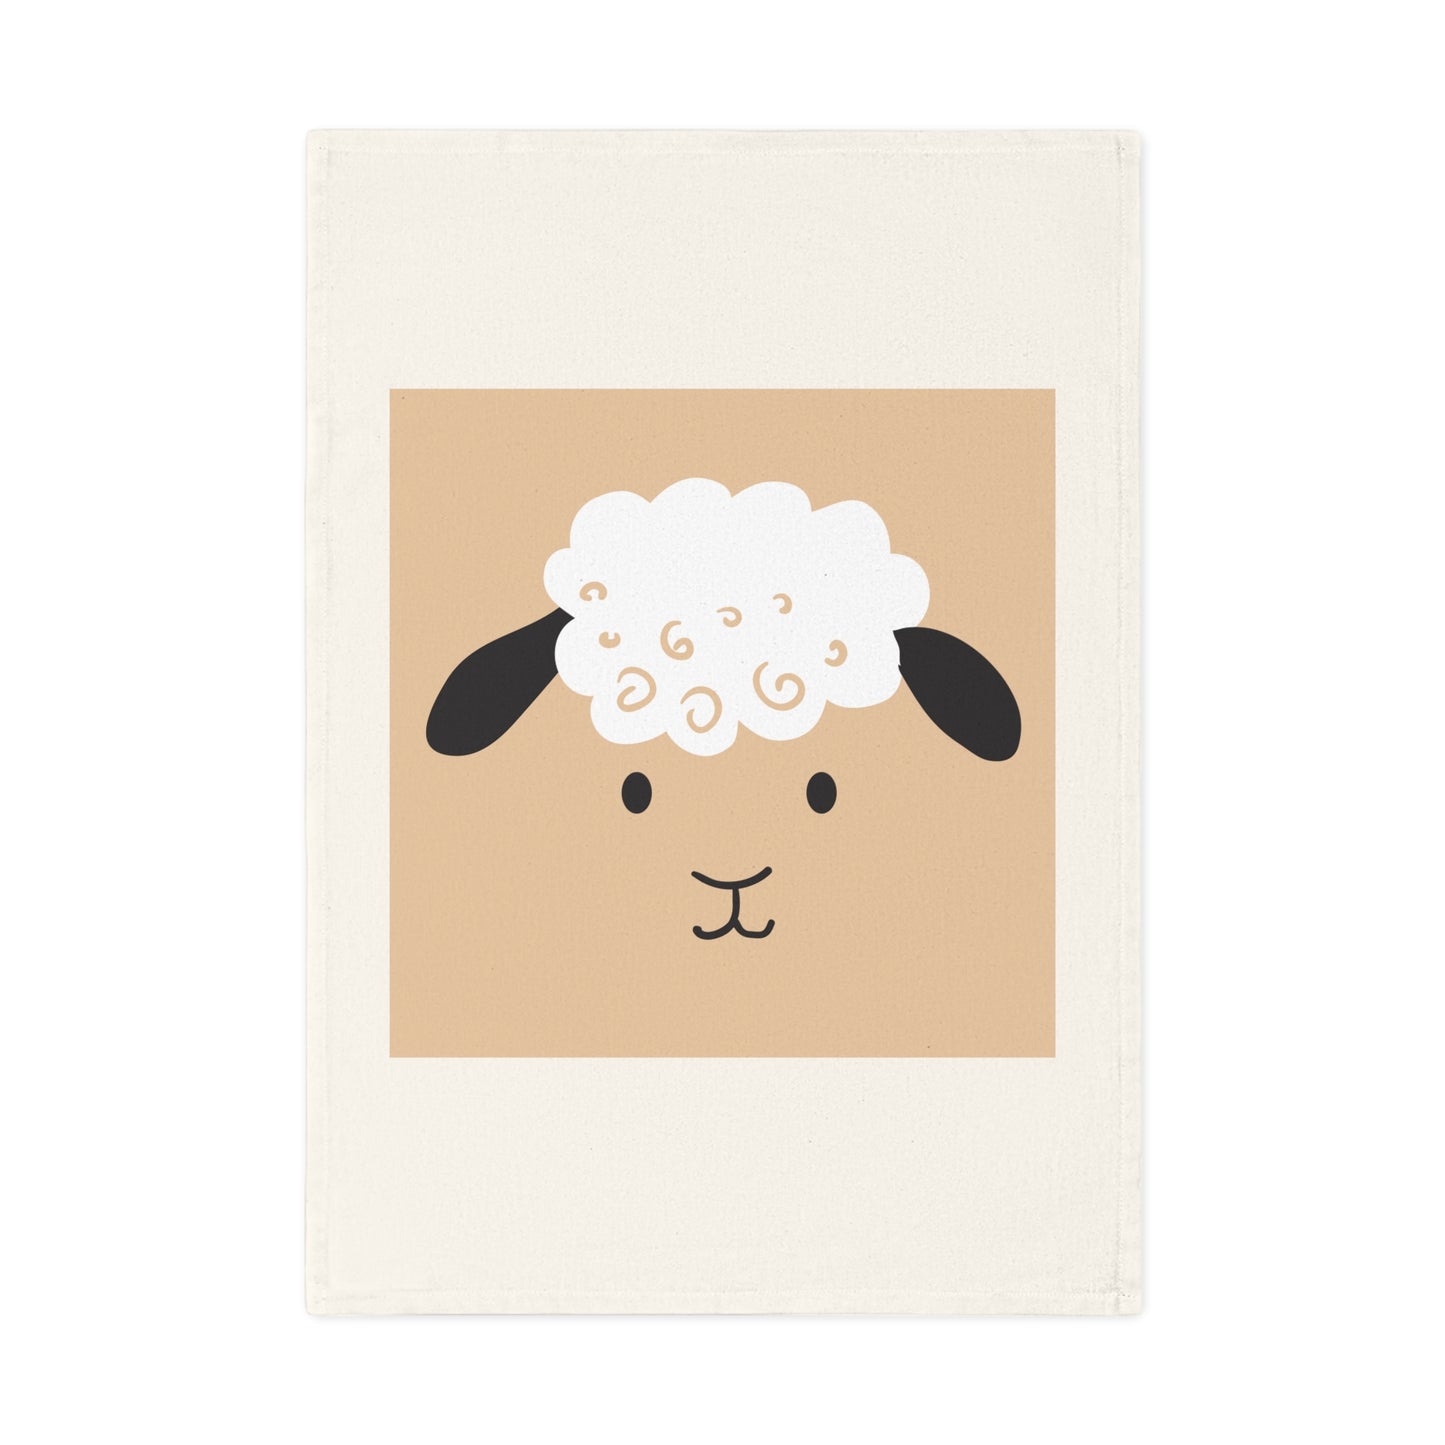 Torchon en coton biologique Sheep Relationsheep, 50 x 70 cm, torchon de cuisine écologique, torchon de salle de bain